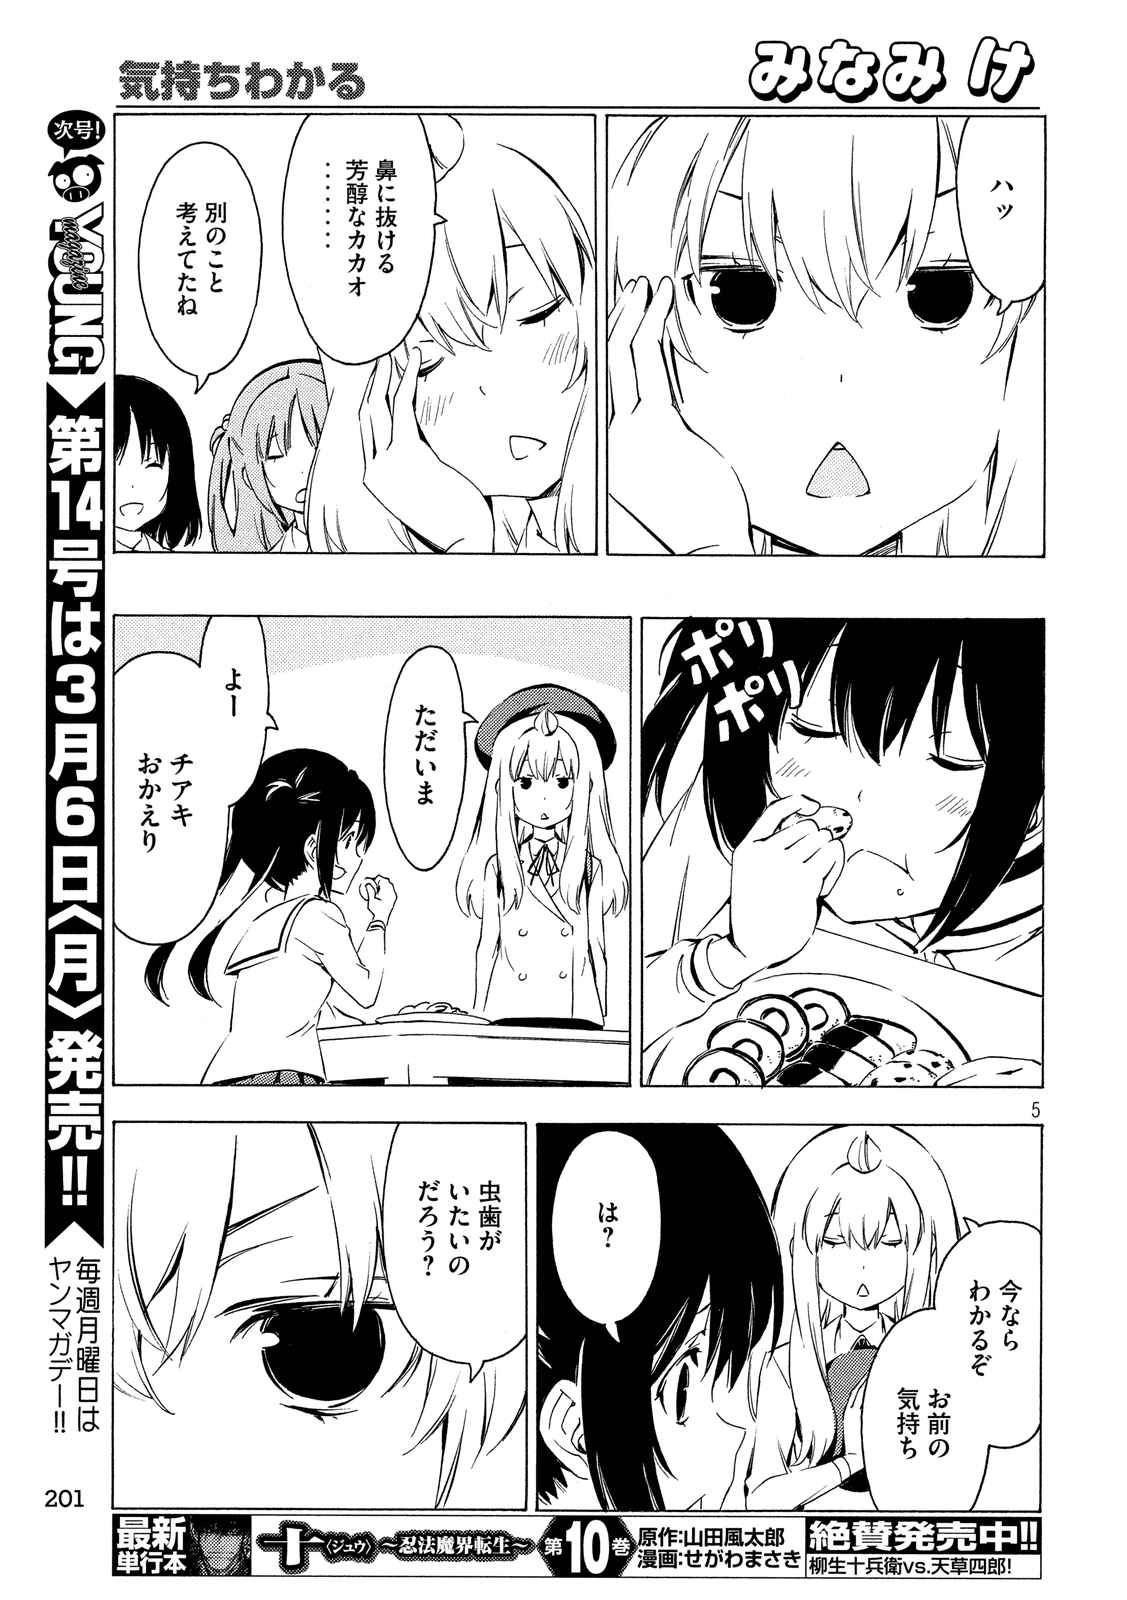 Minami-ke - Chapter 311 - Page 5